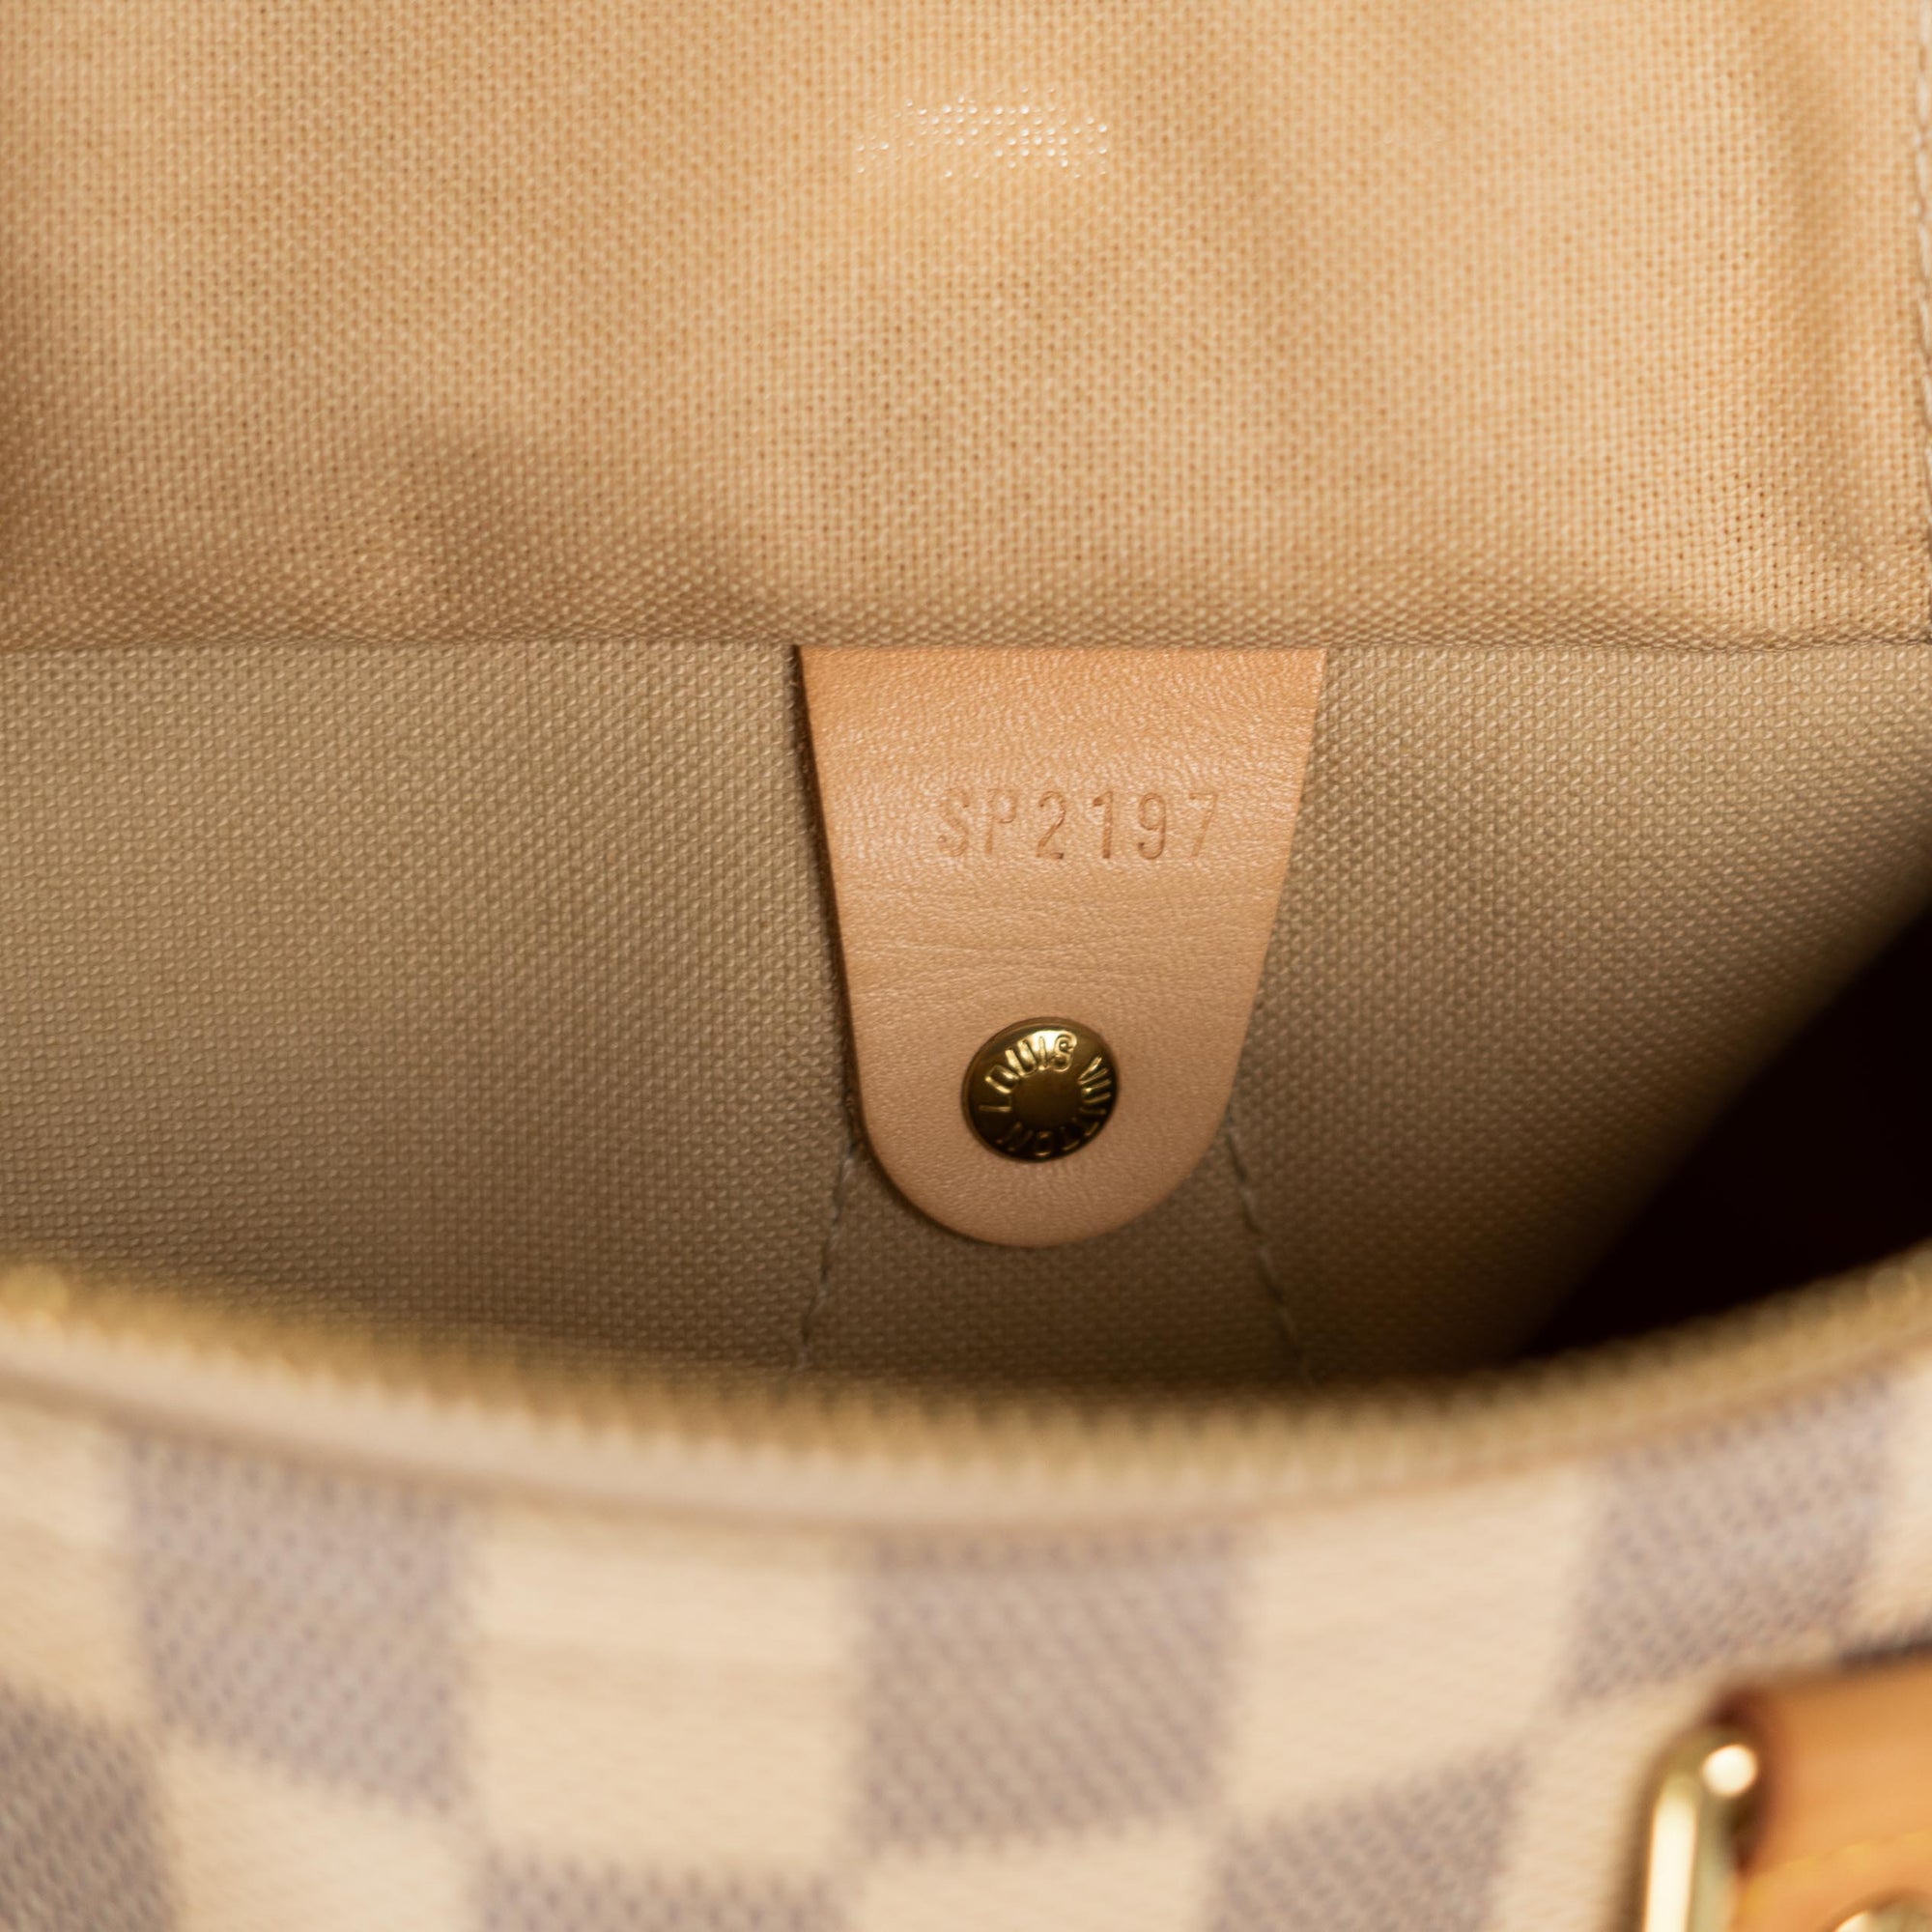 Louis Vuitton Speedy Handbag 365286